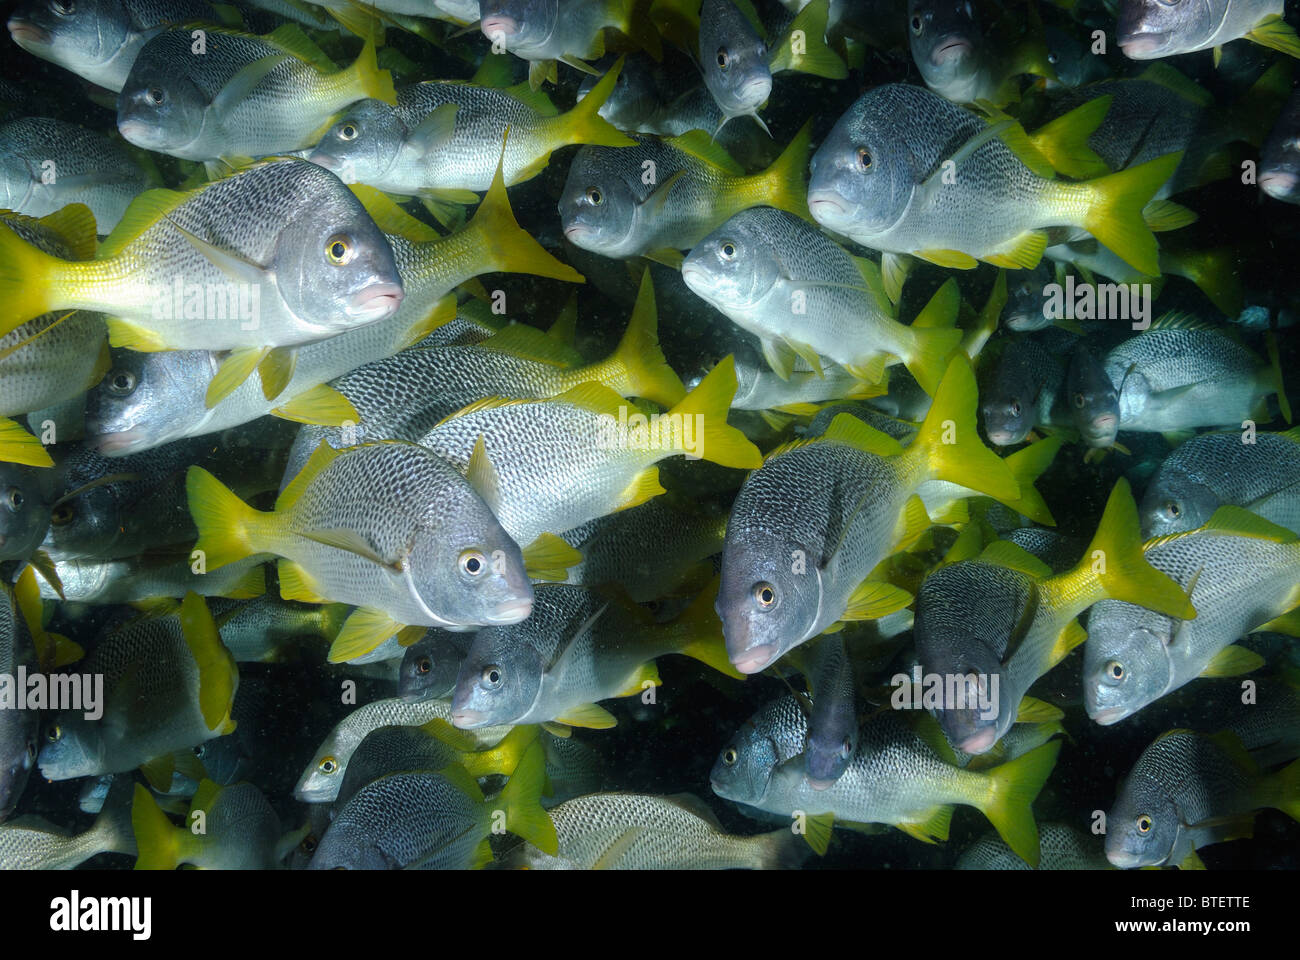 School of burrito grunt fishes, Galapagos, Ecuador Stock Photo